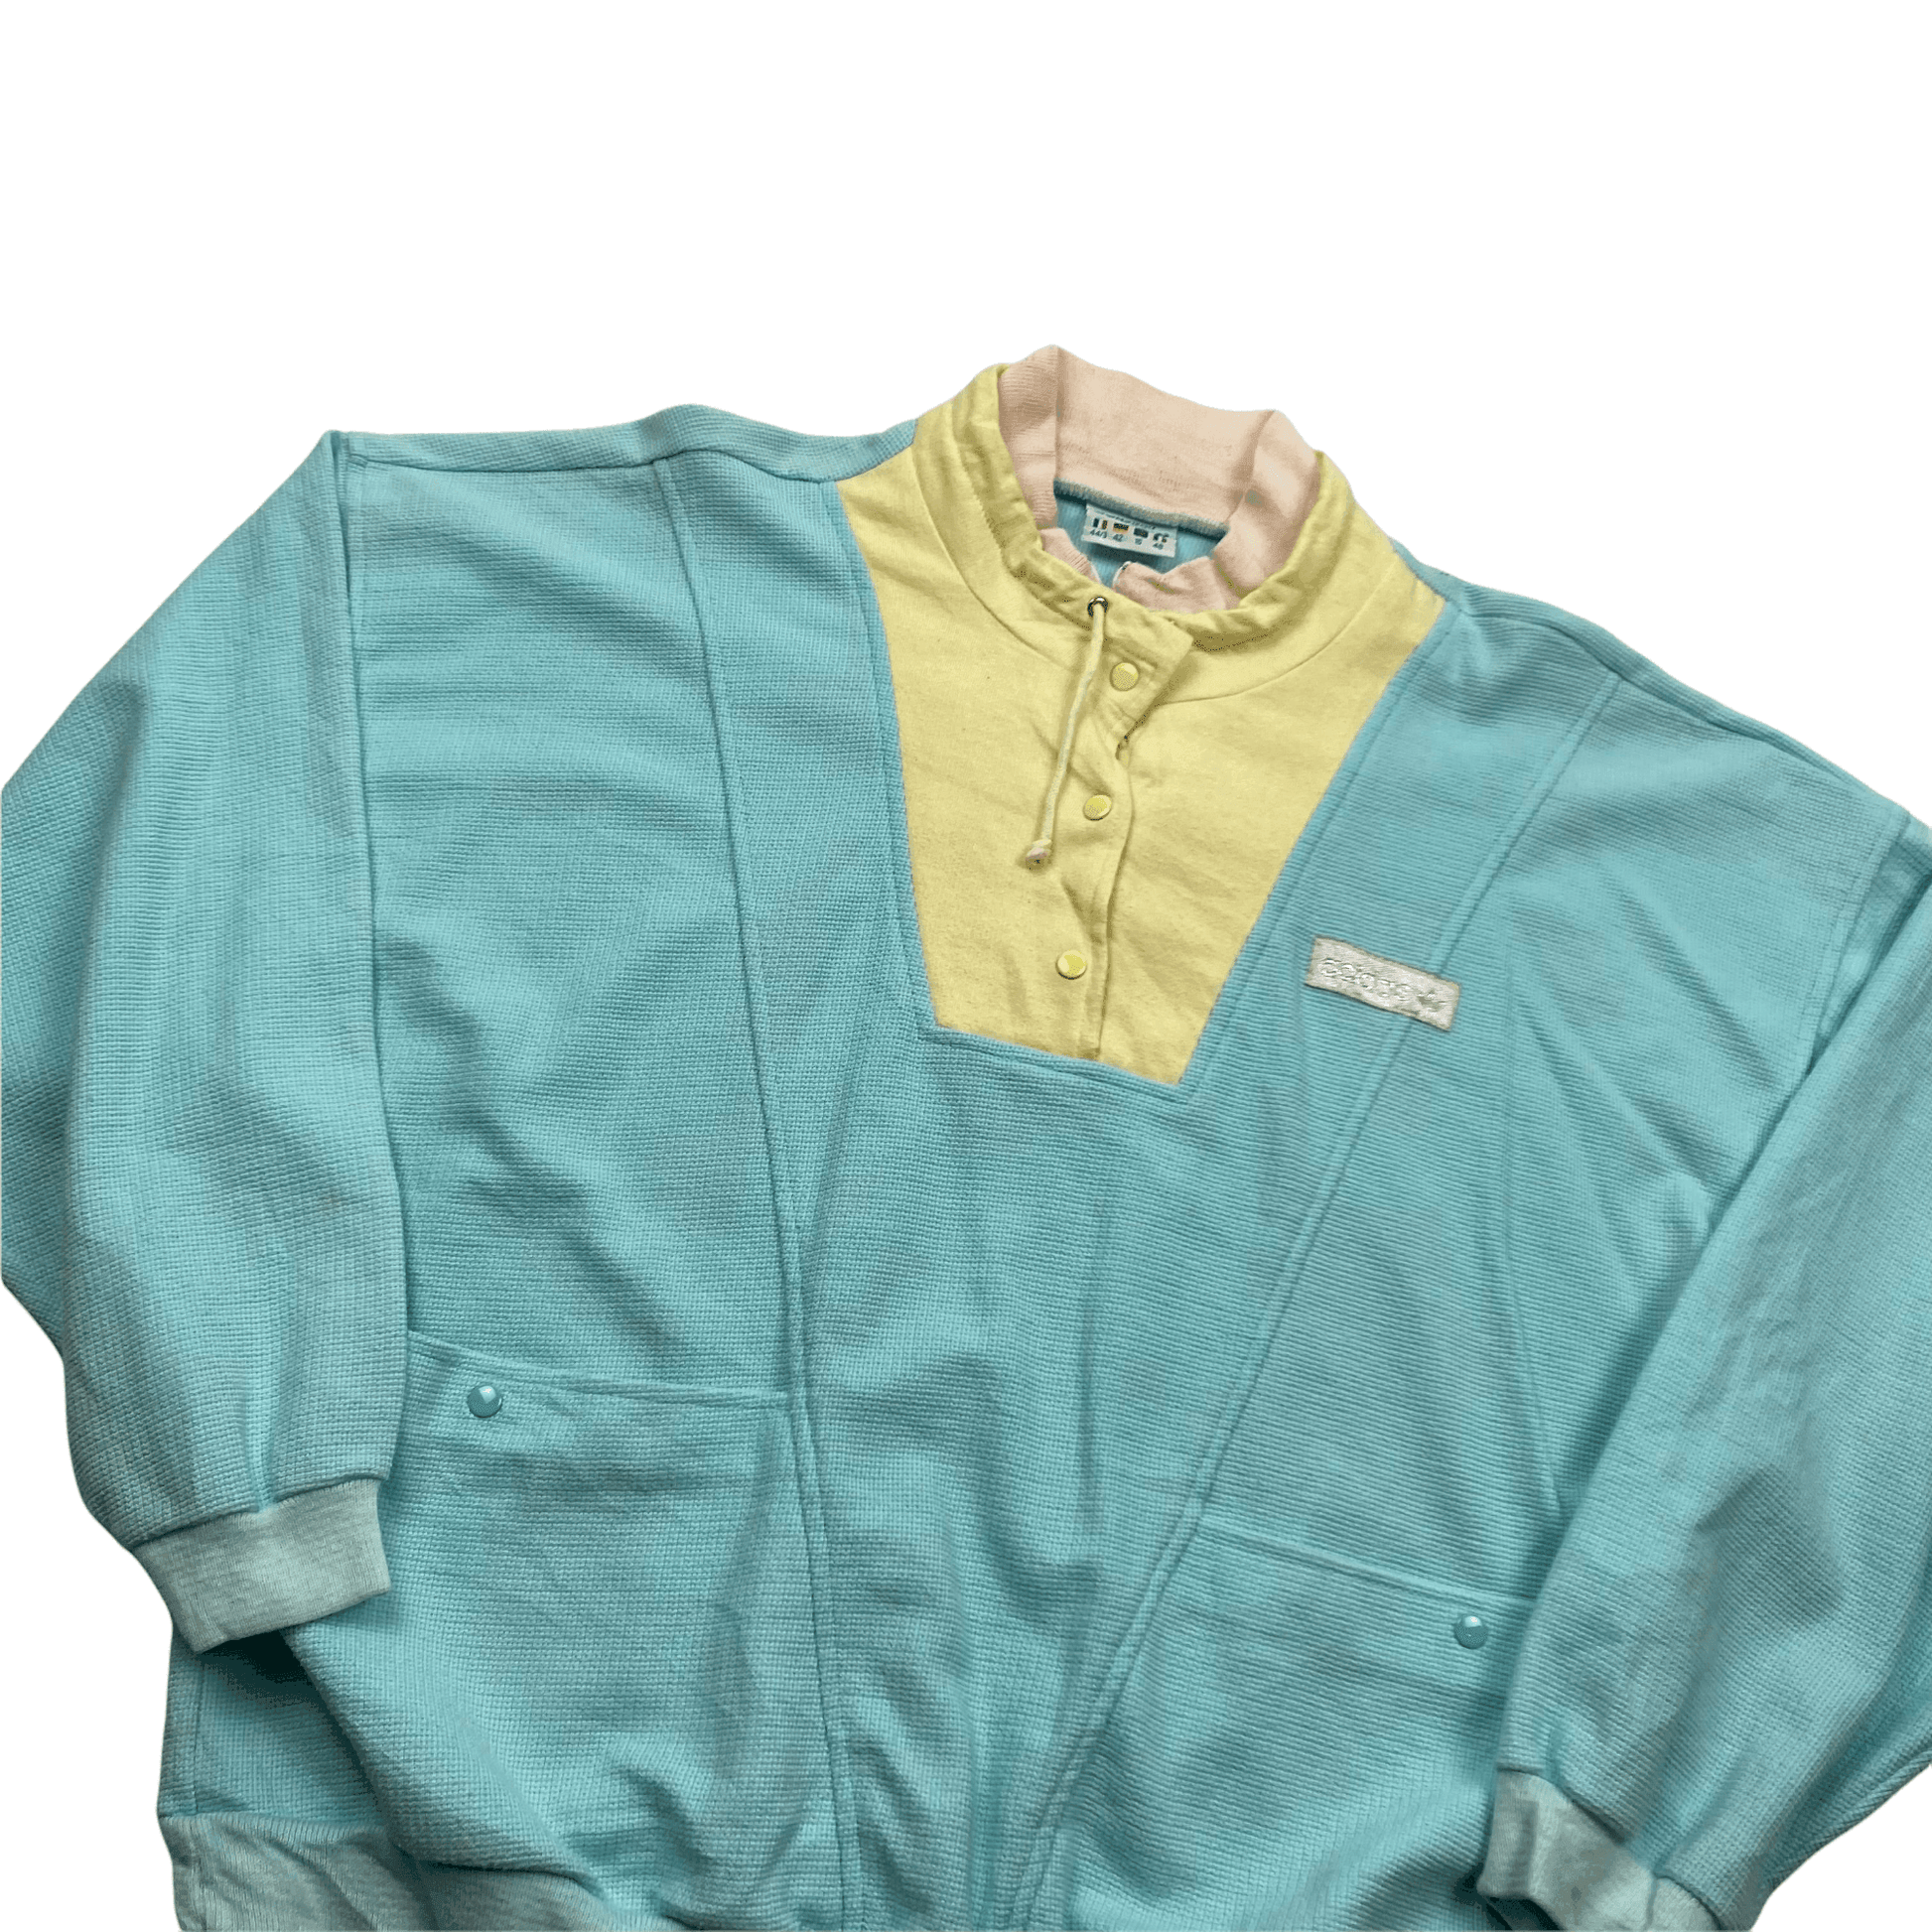 Vintage 90s Women's Baby Blue + Yellow Adidas Sweatshirt - Medium - The Streetwear Studio